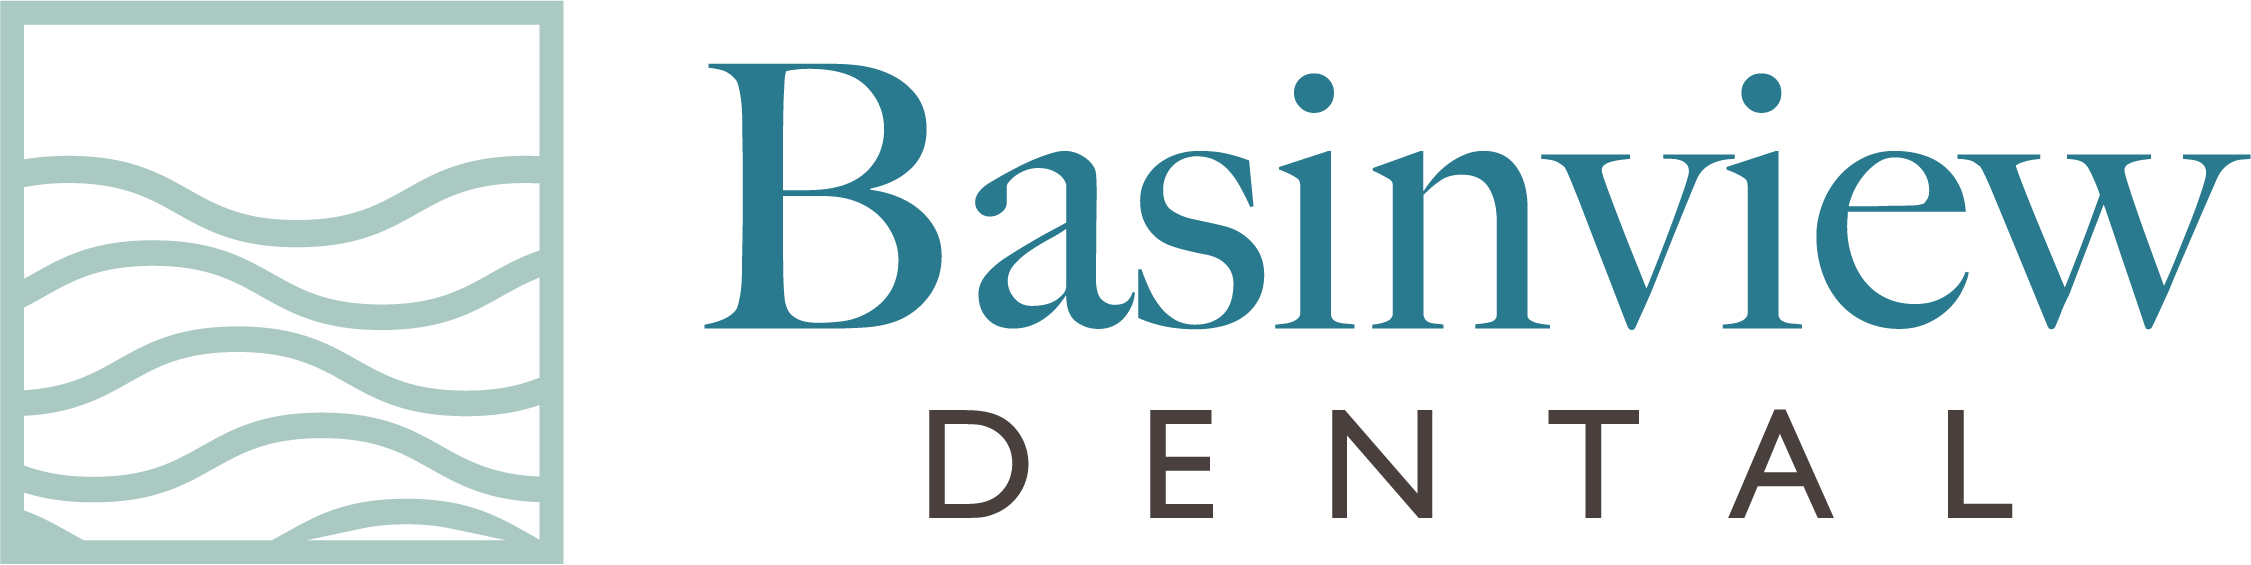 Basinview Dental